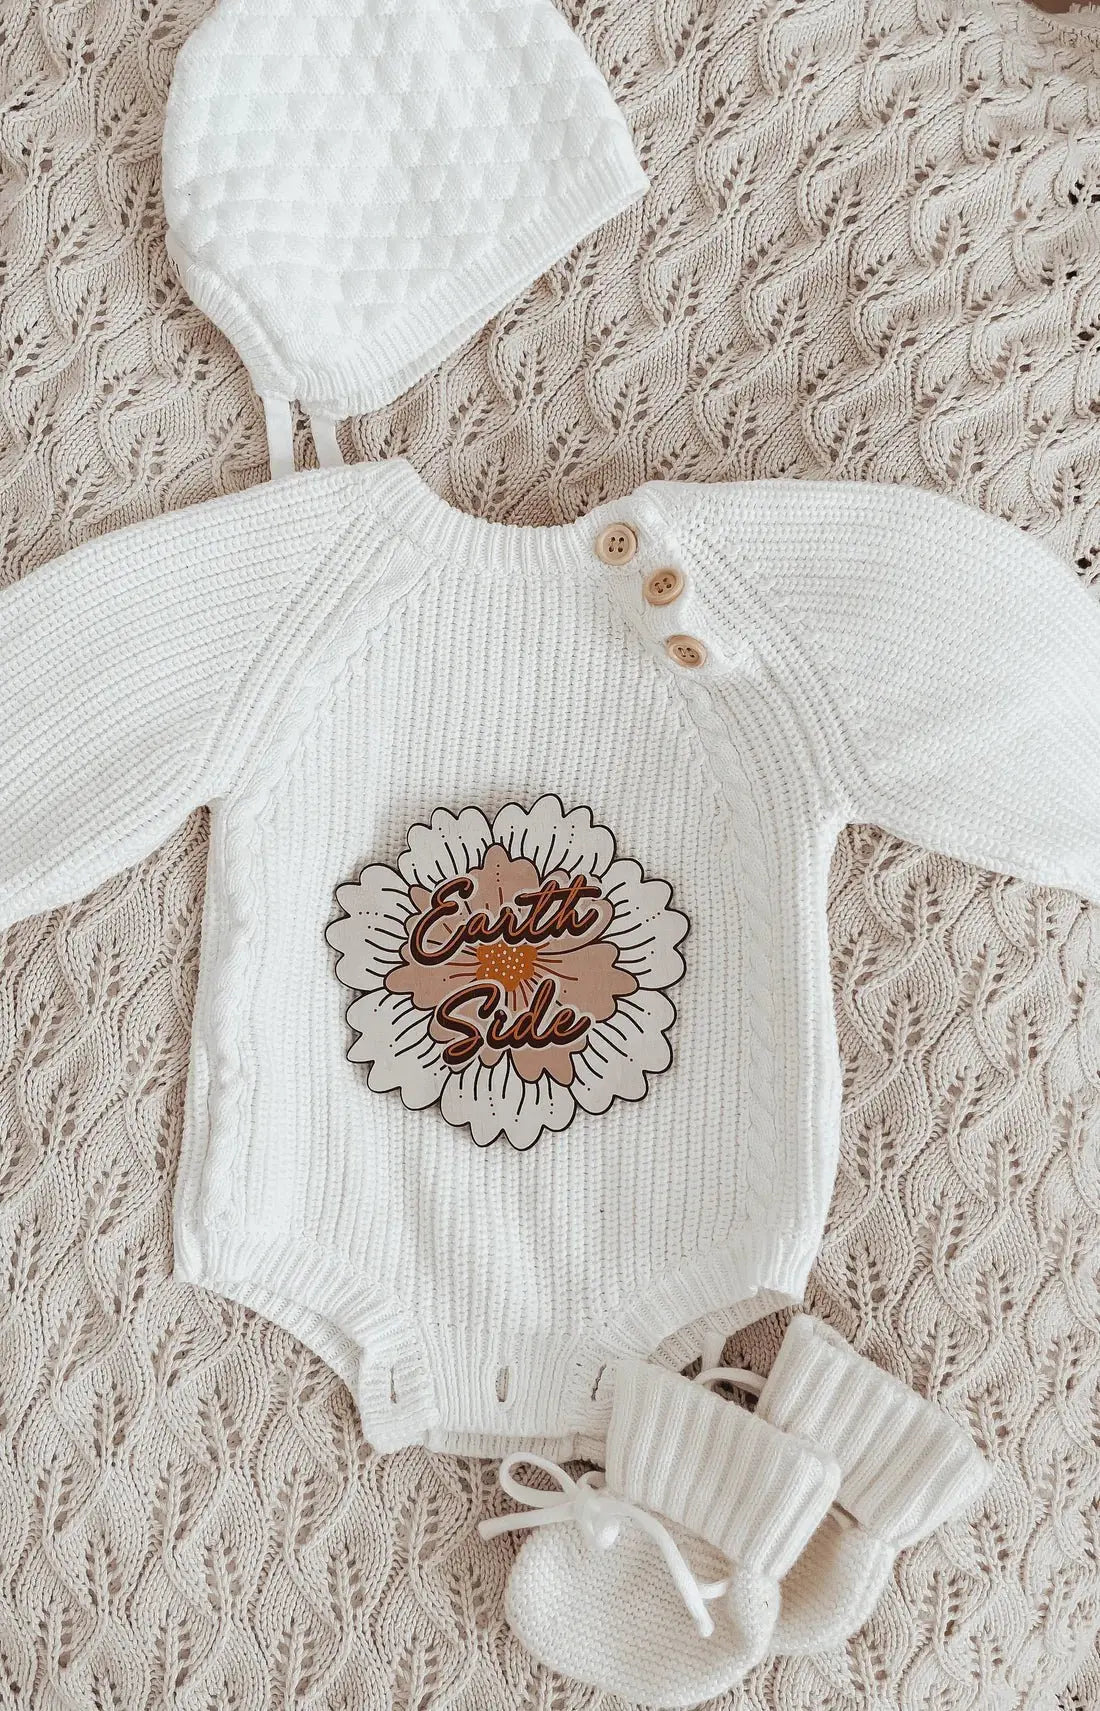 Baby clothes with Retro Daisy milestone set